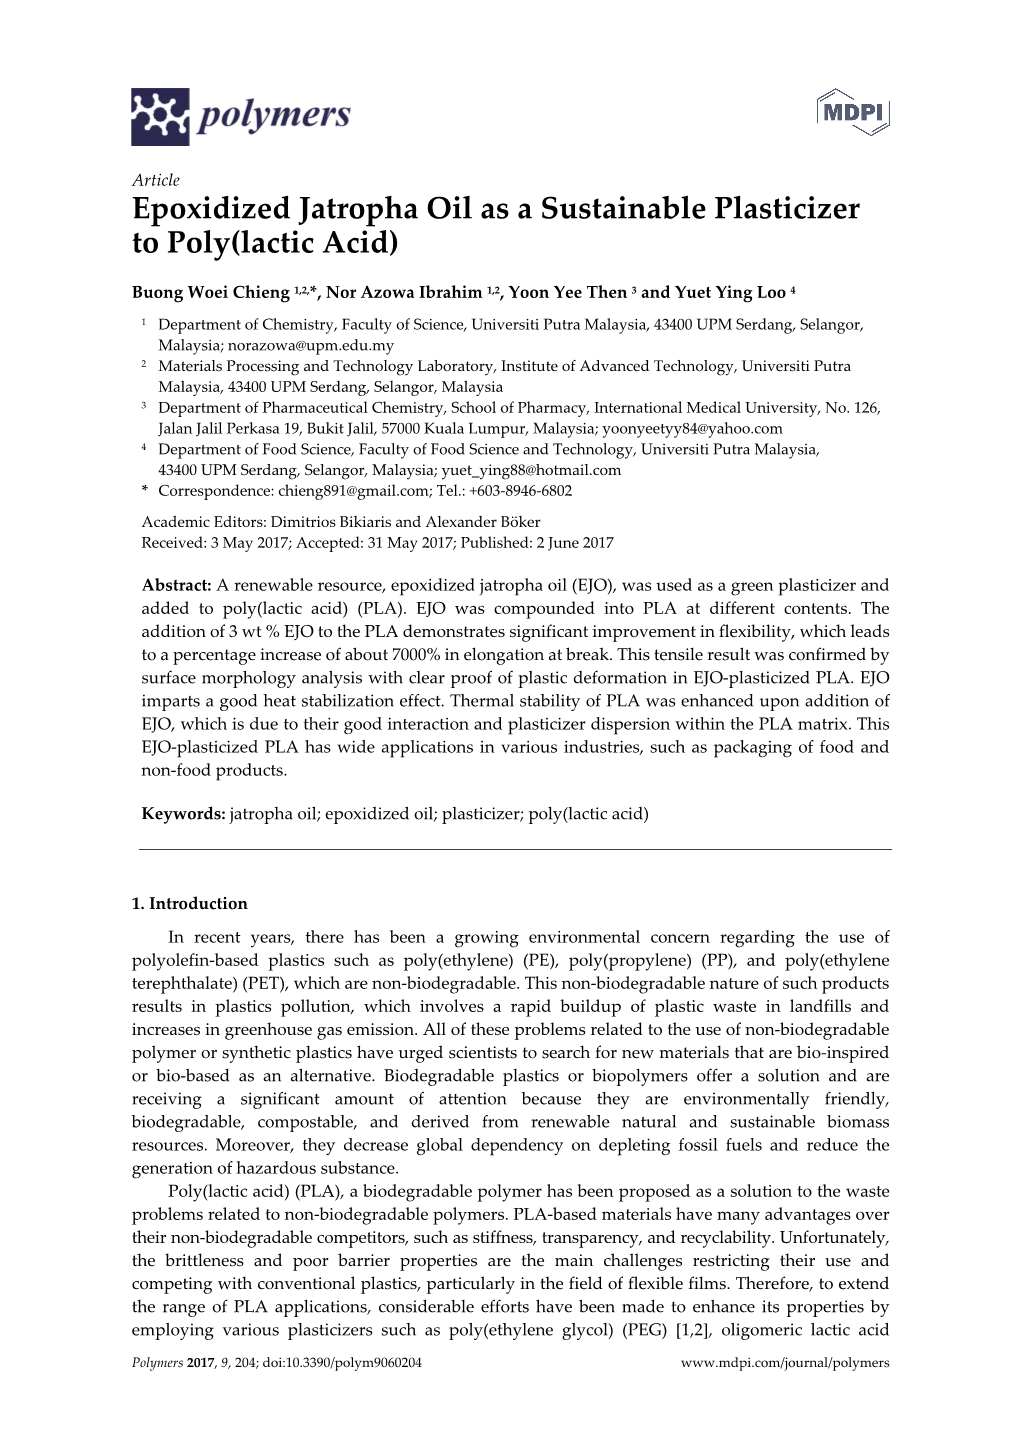 Epoxidized Jatropha Oil As a Sustainable Plasticizer to Poly(Lactic Acid)